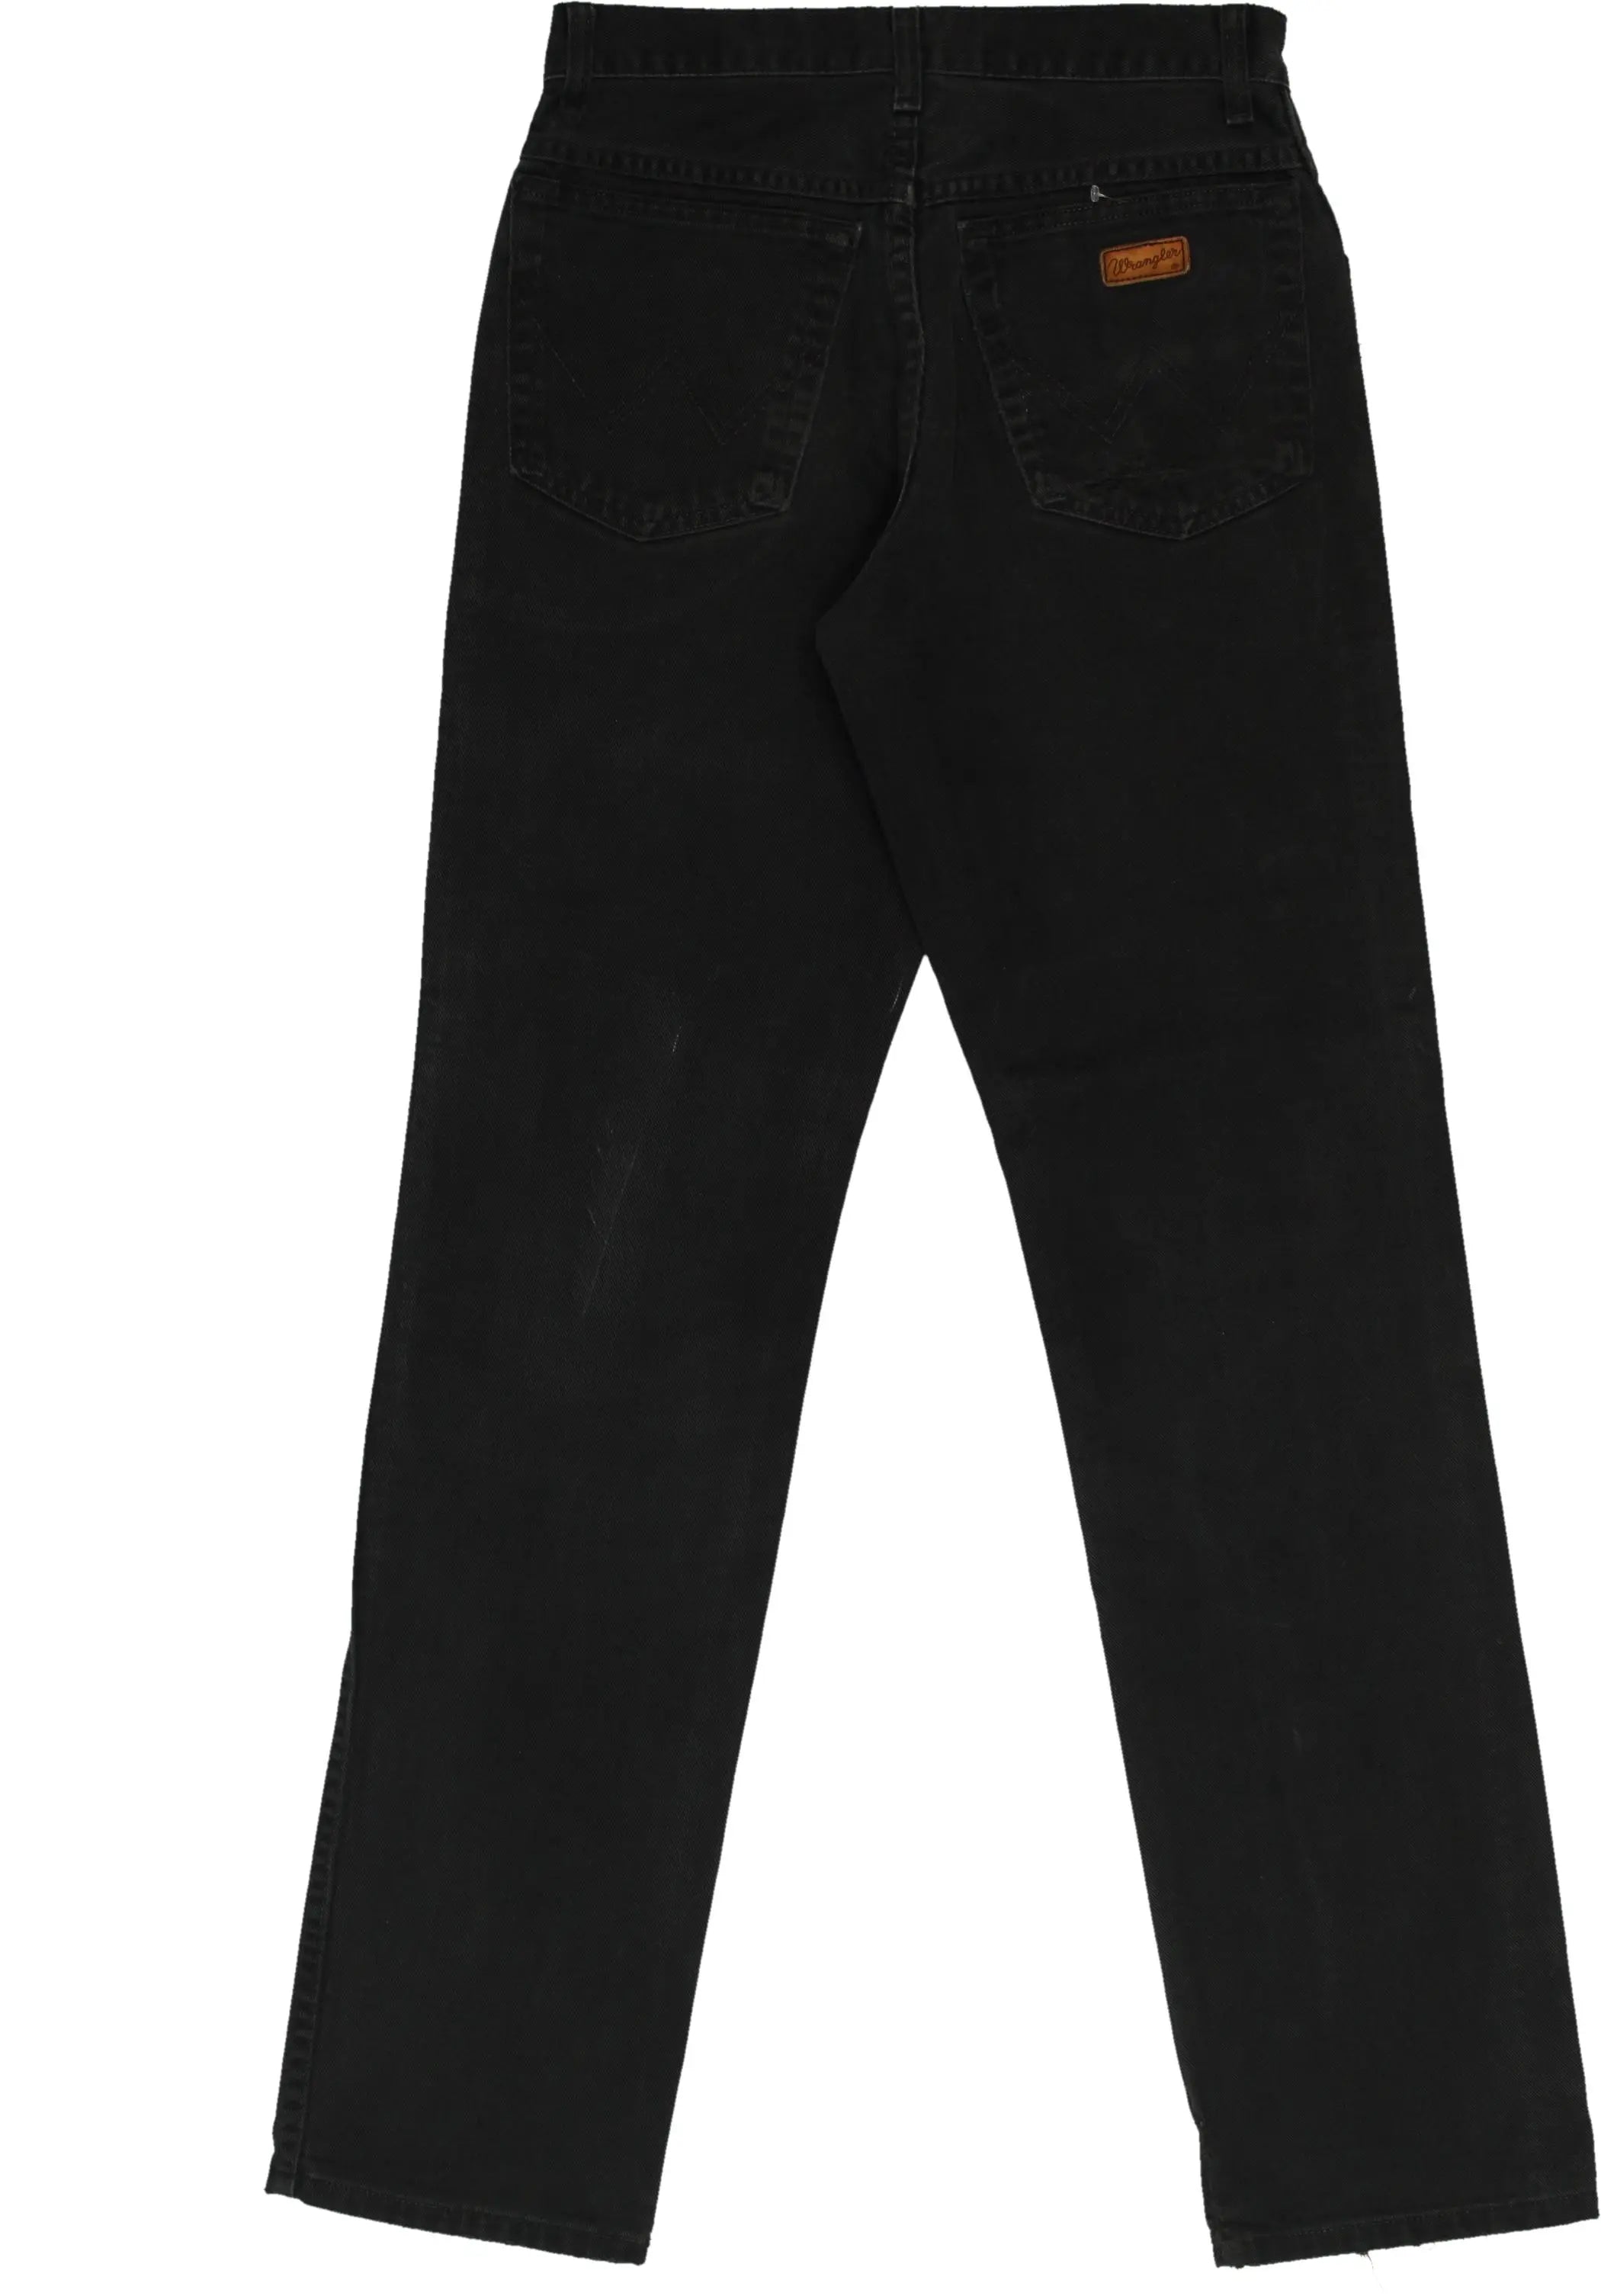 Wrangler - Wrangler Slim Fit Jeans- ThriftTale.com - Vintage and second handclothing